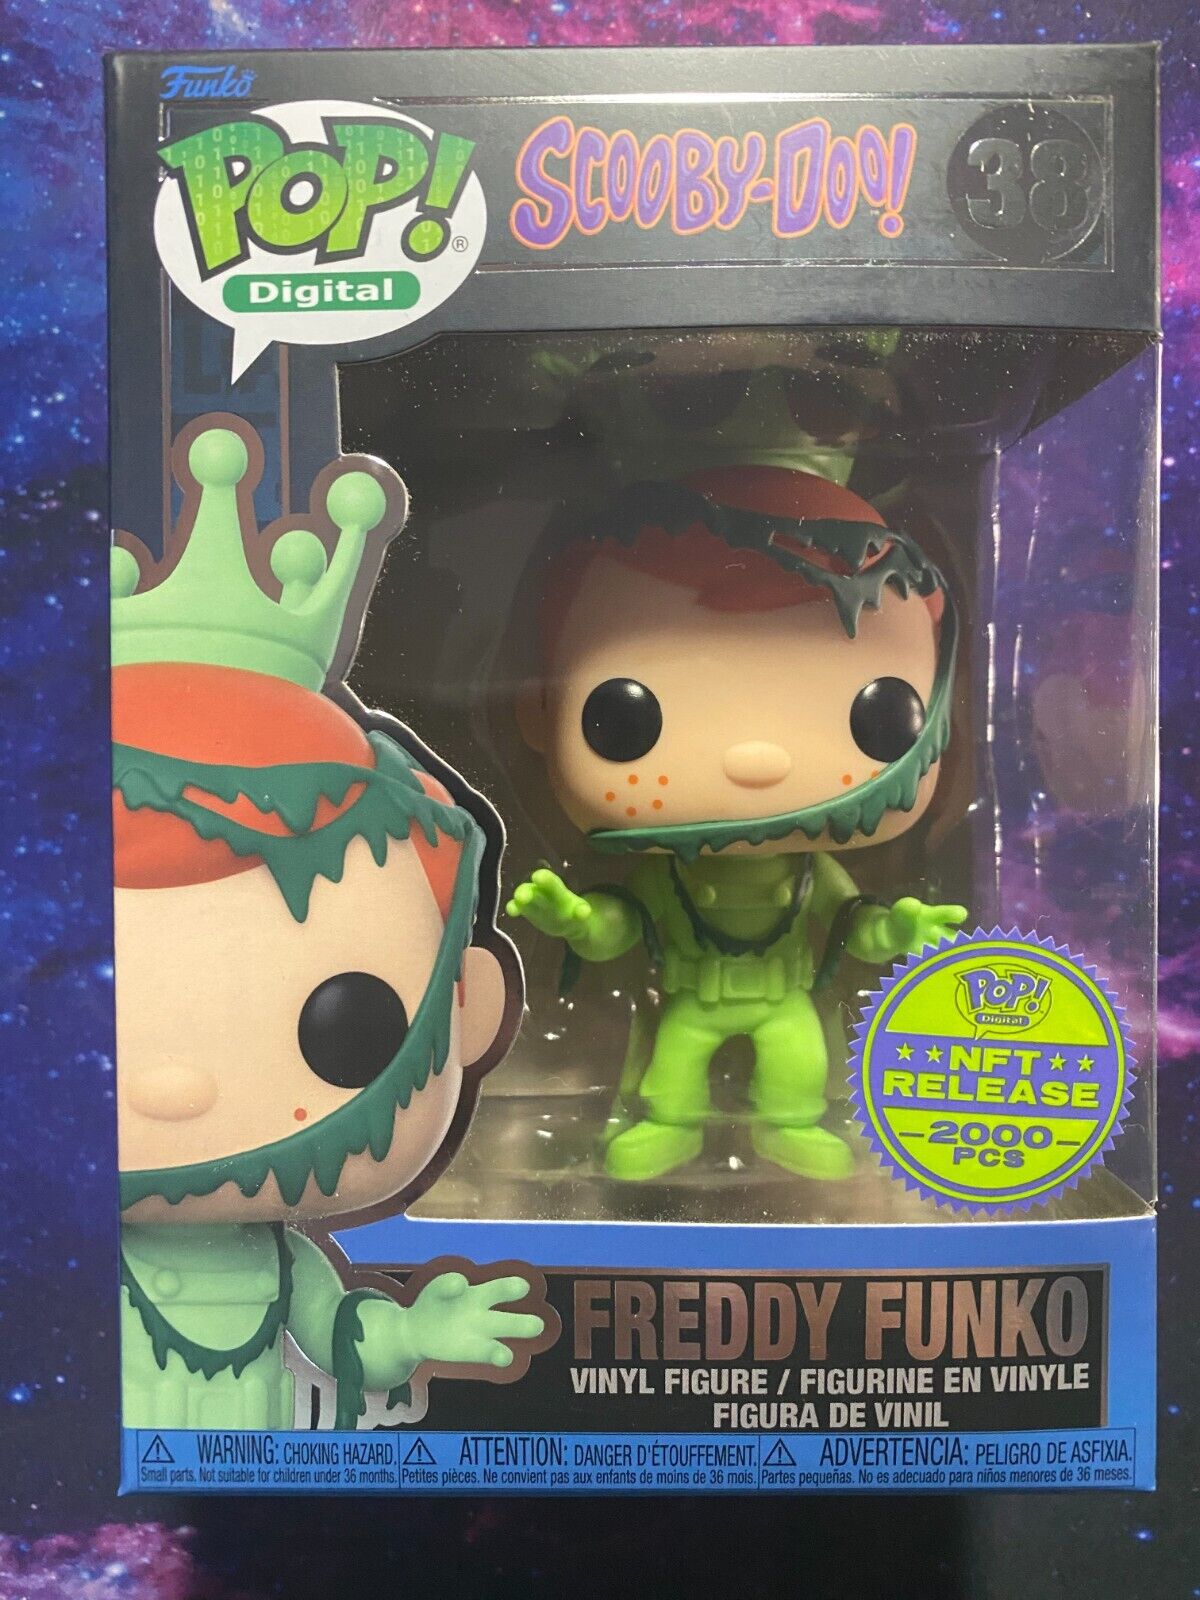 Funko POP Freddy Funko as Captain Cutler LE 2000 Royalty Digital Pop Scooby-Doo